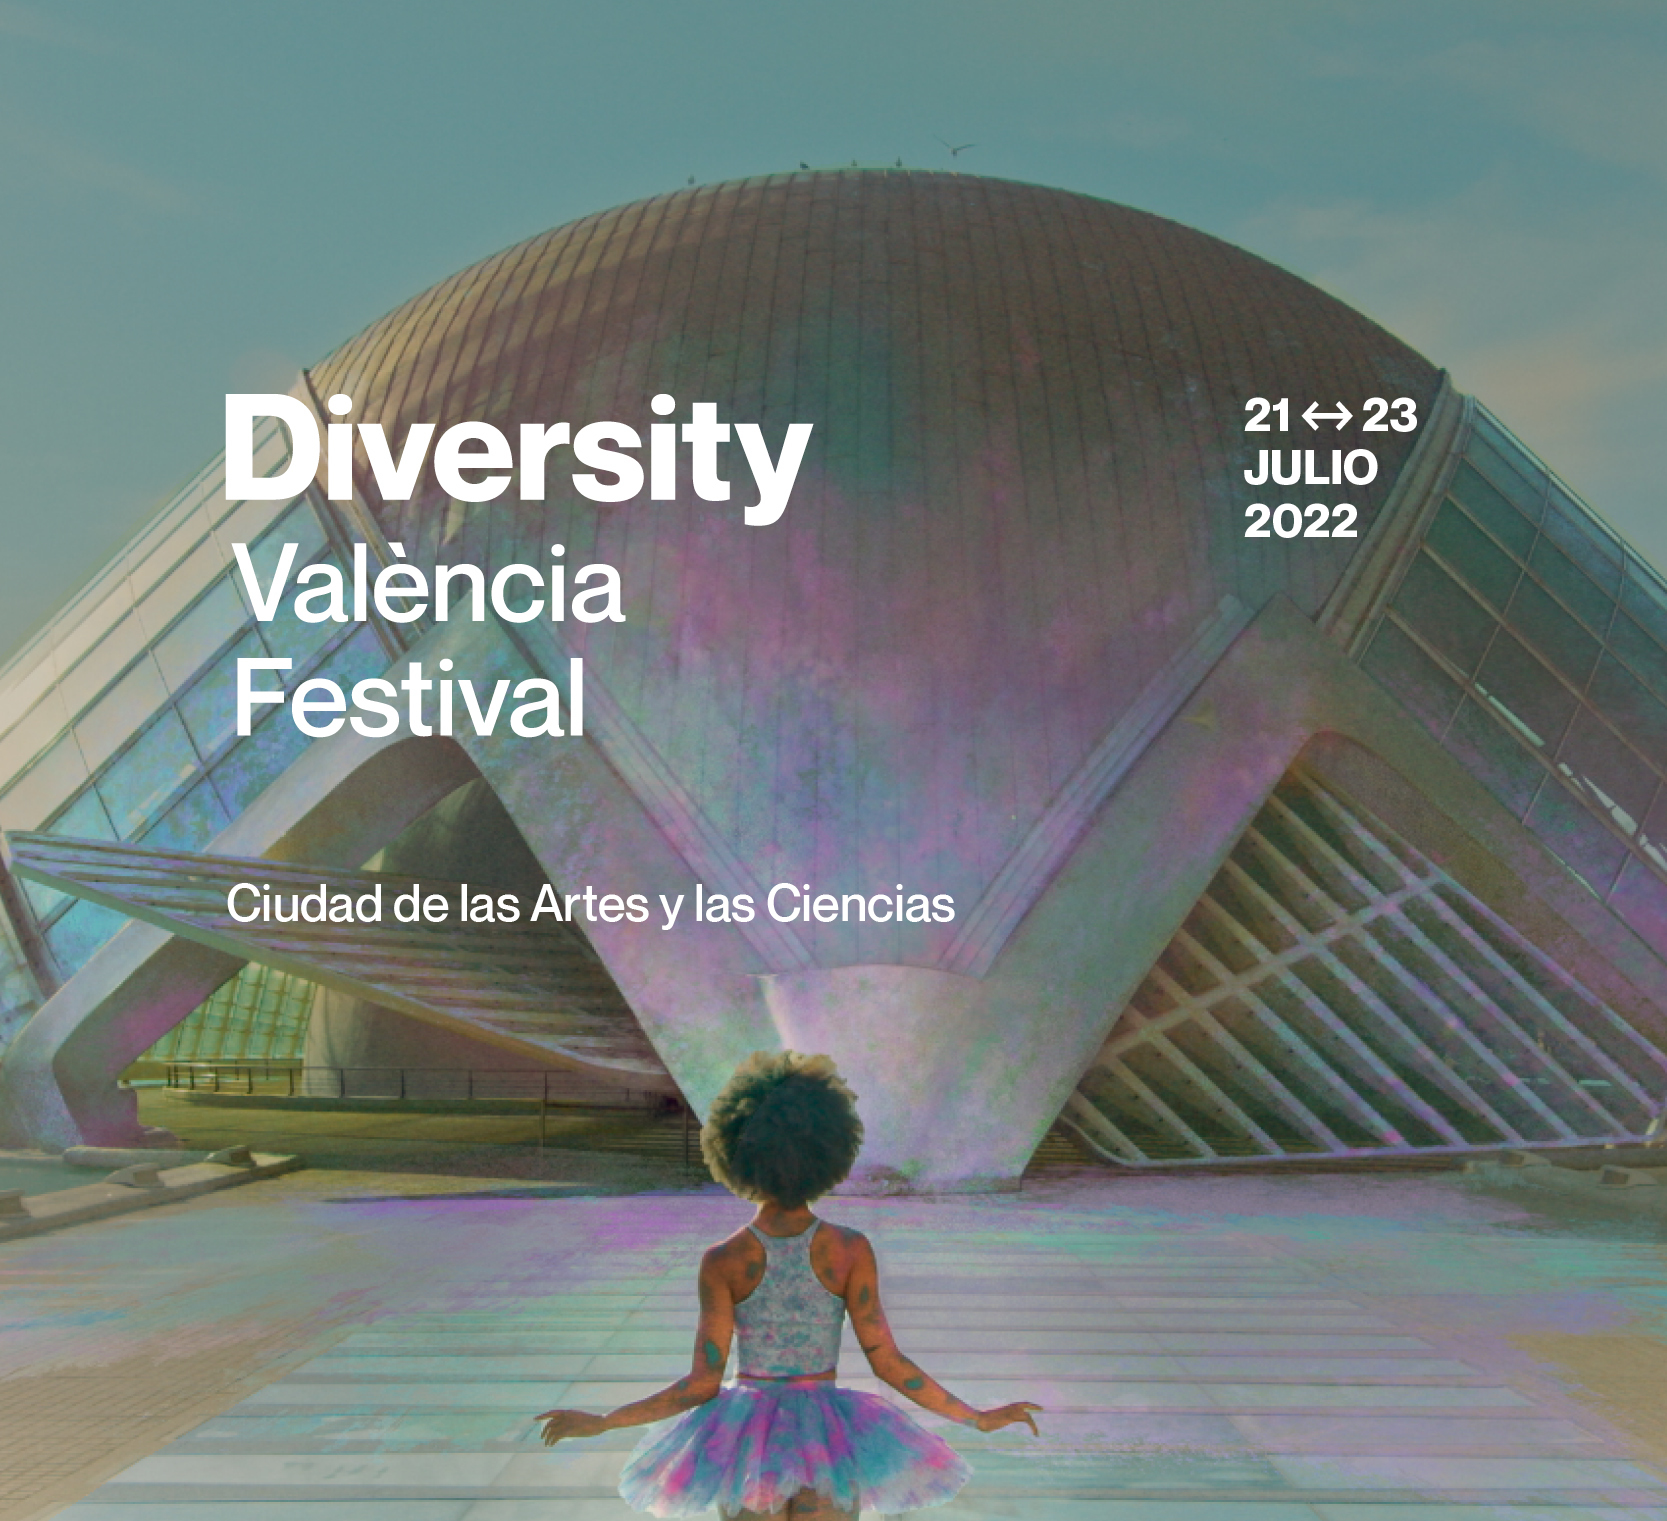 Cartel promocional del Diversity Valncia Festival.